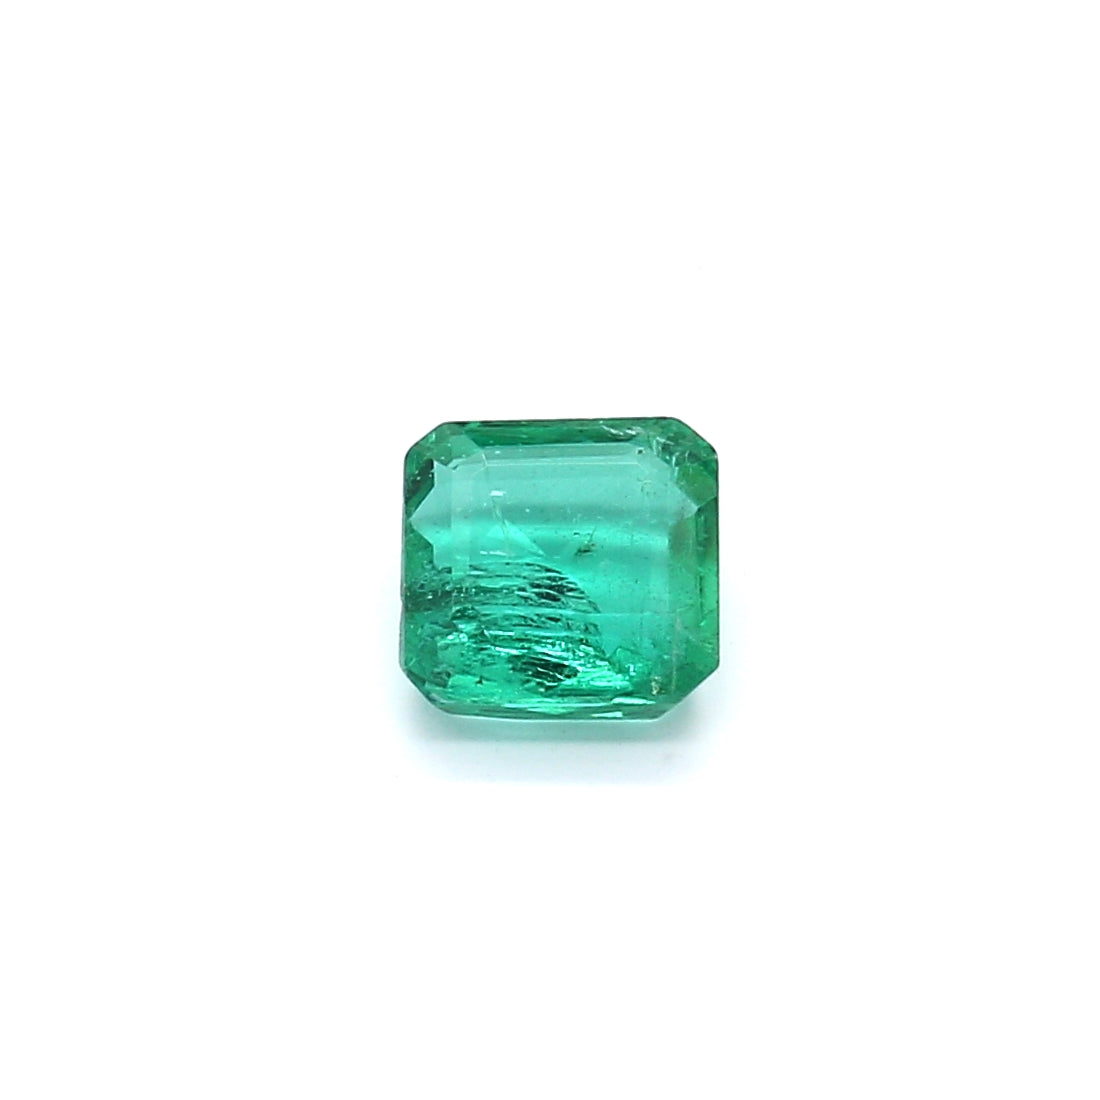 0.87ct Octagon Emerald, Moderate Oil, Zambia - 5.61 x 5.50 x 3.08mm